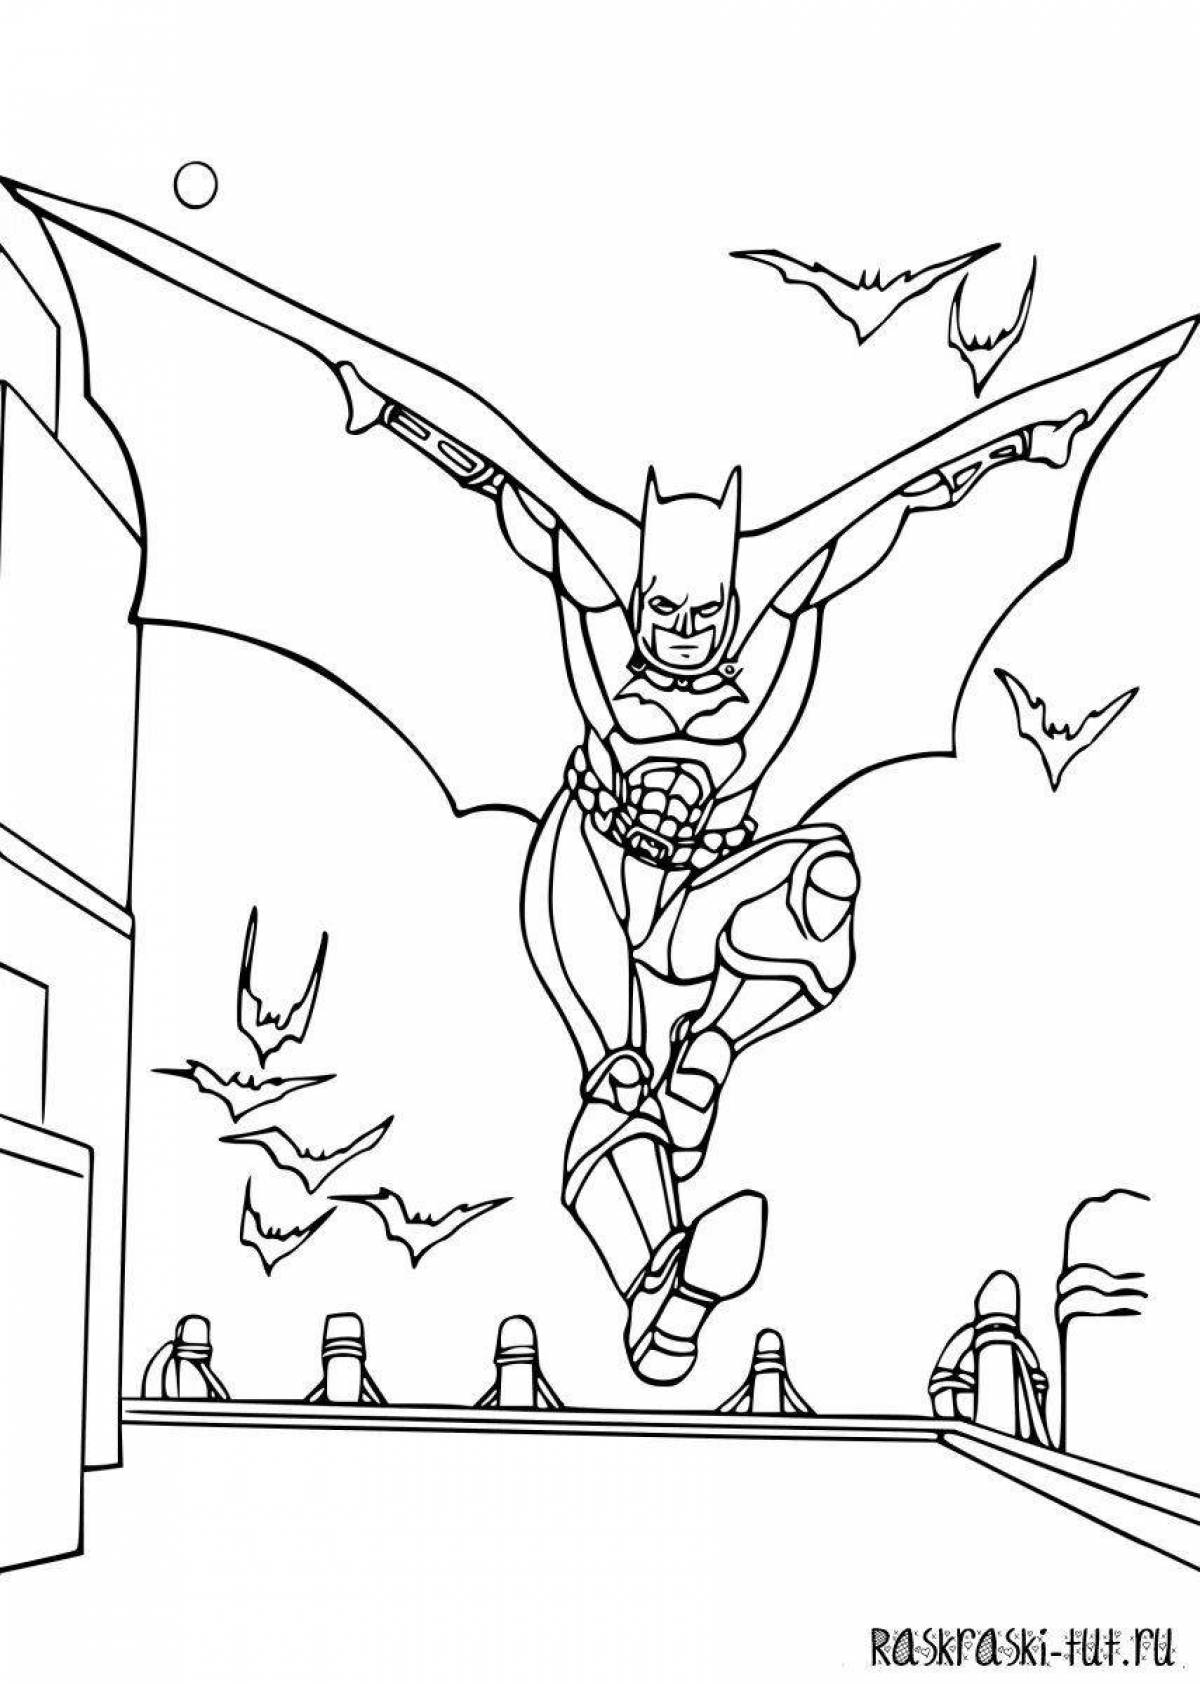 Majestic batman coloring page